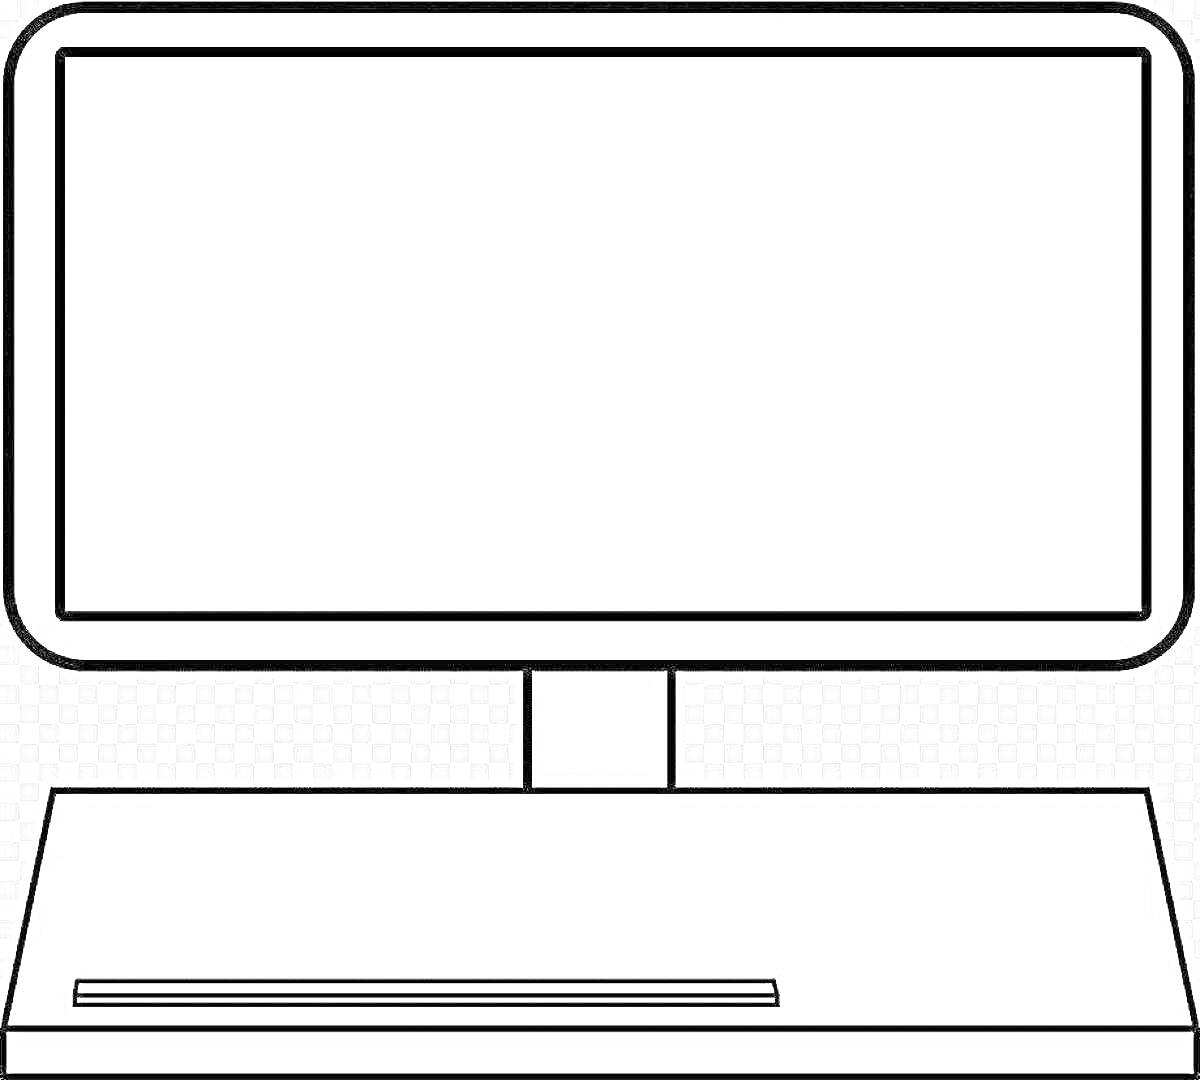 На раскраске изображено: Монитор, Экран, Дисплей, Подставка, Клавиатура, Компьютер, Техника, Электроника